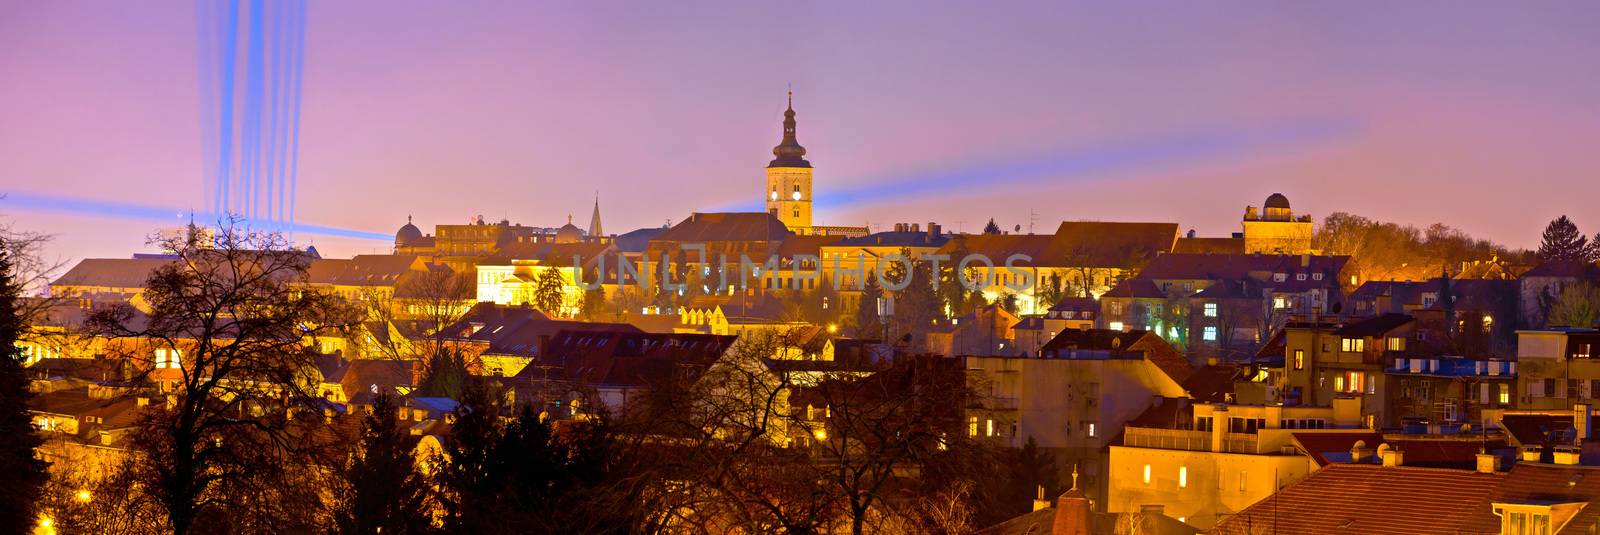 Zagreb historic upper town night view, capital of Croatia